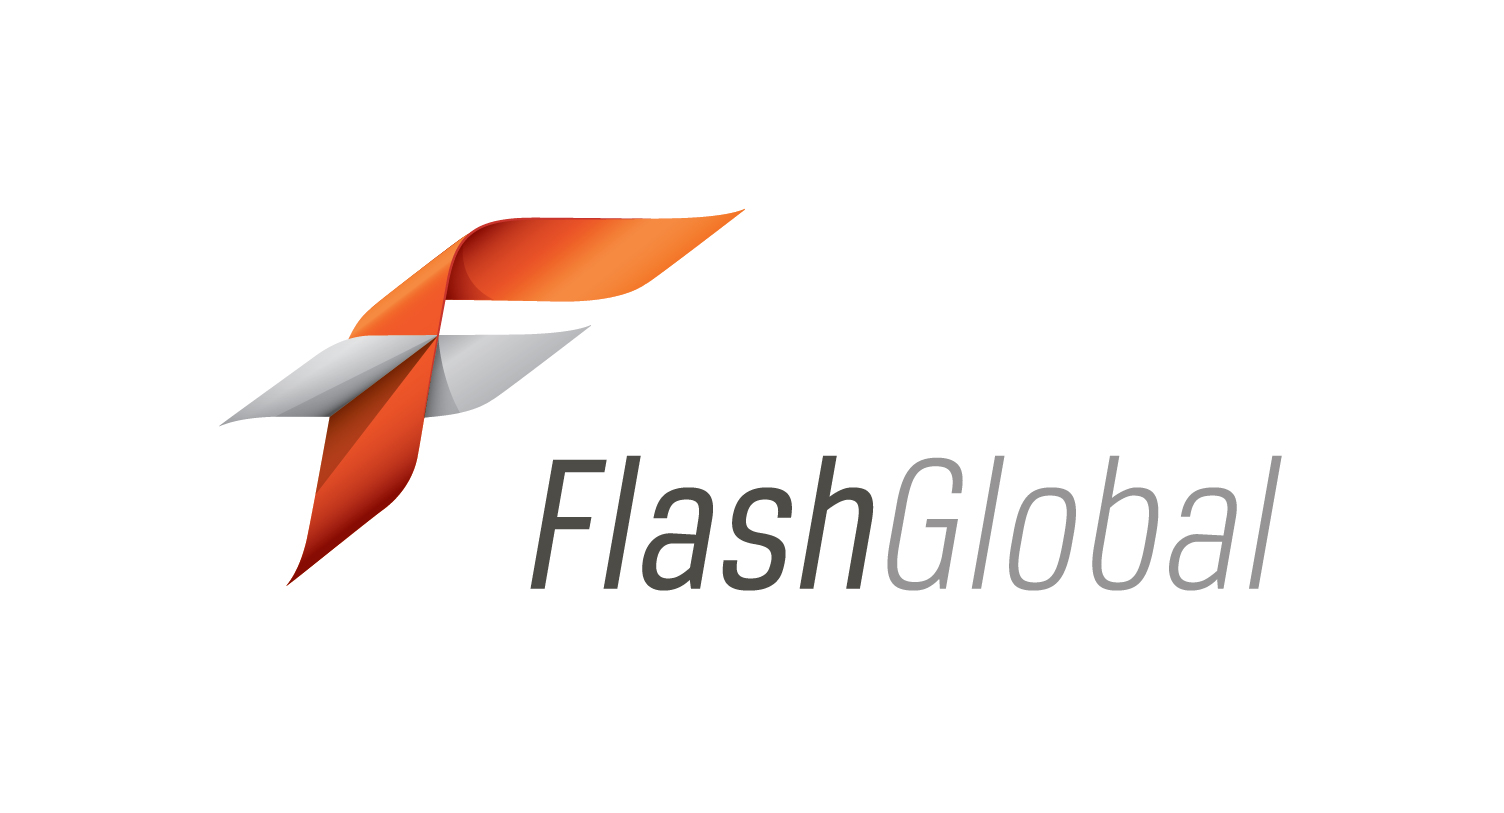 Flash Global logo